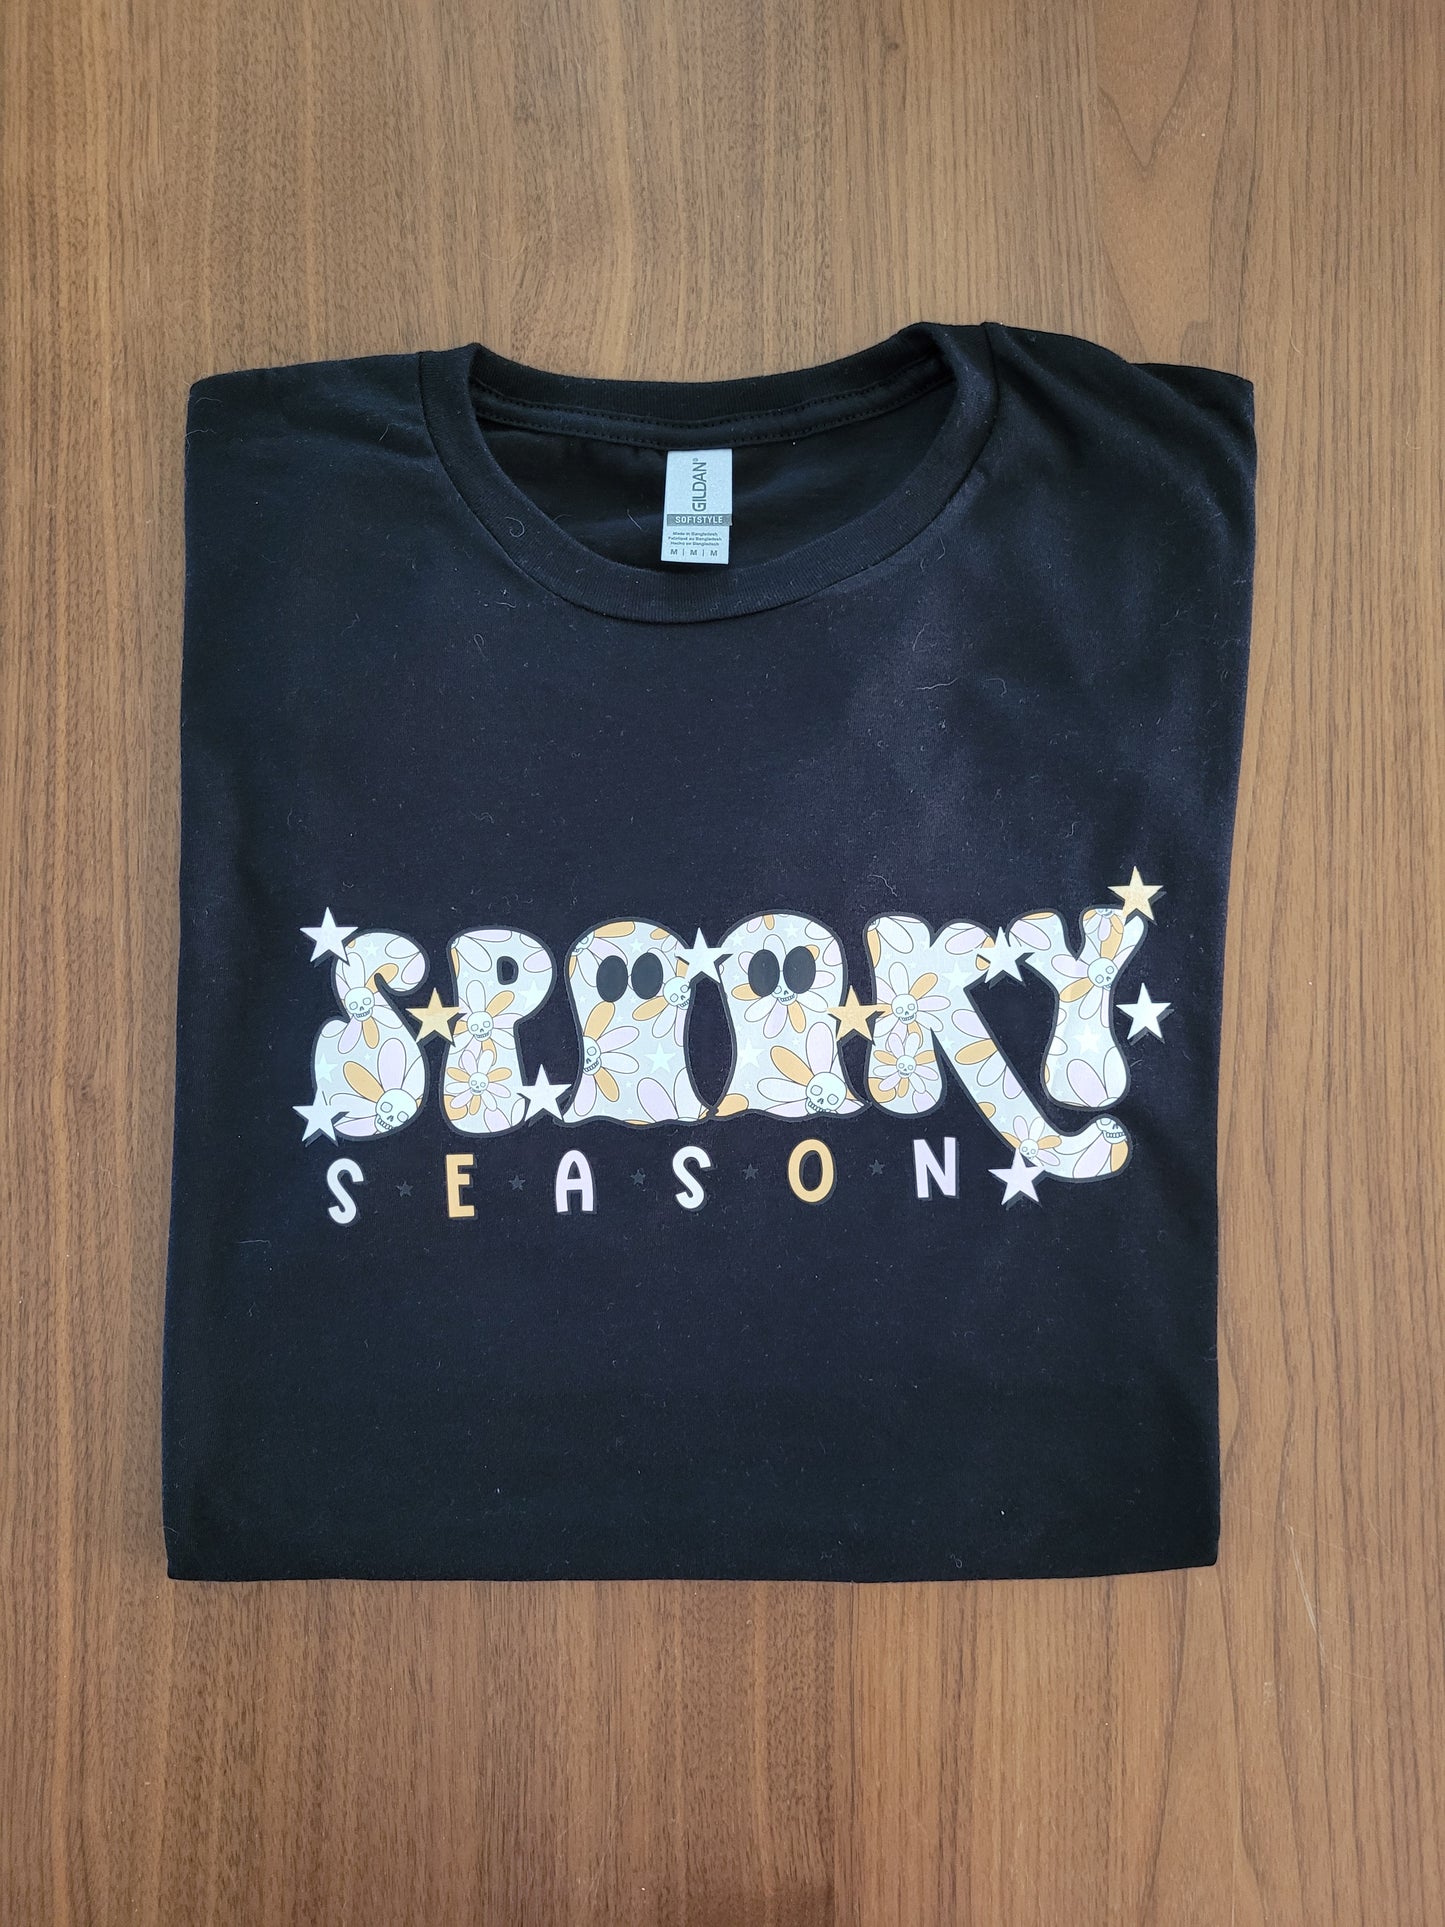 "Spooky Season" T-Shirt